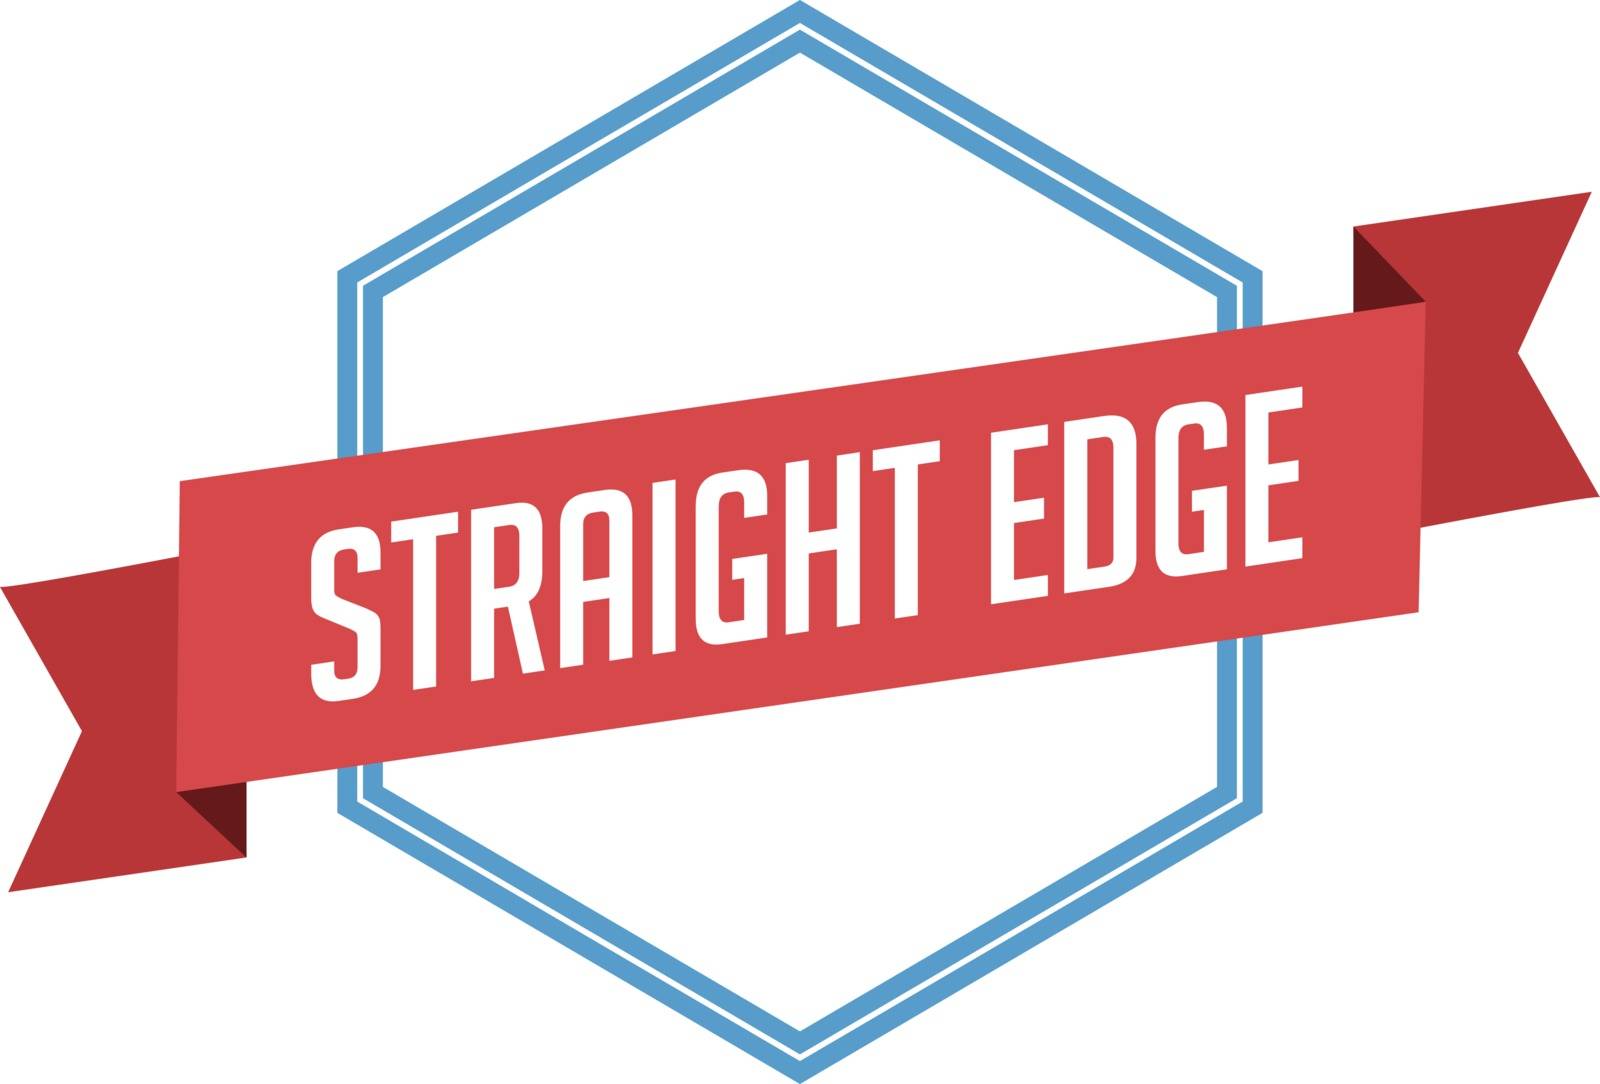 retro vintage badge label straight edge by vector1st